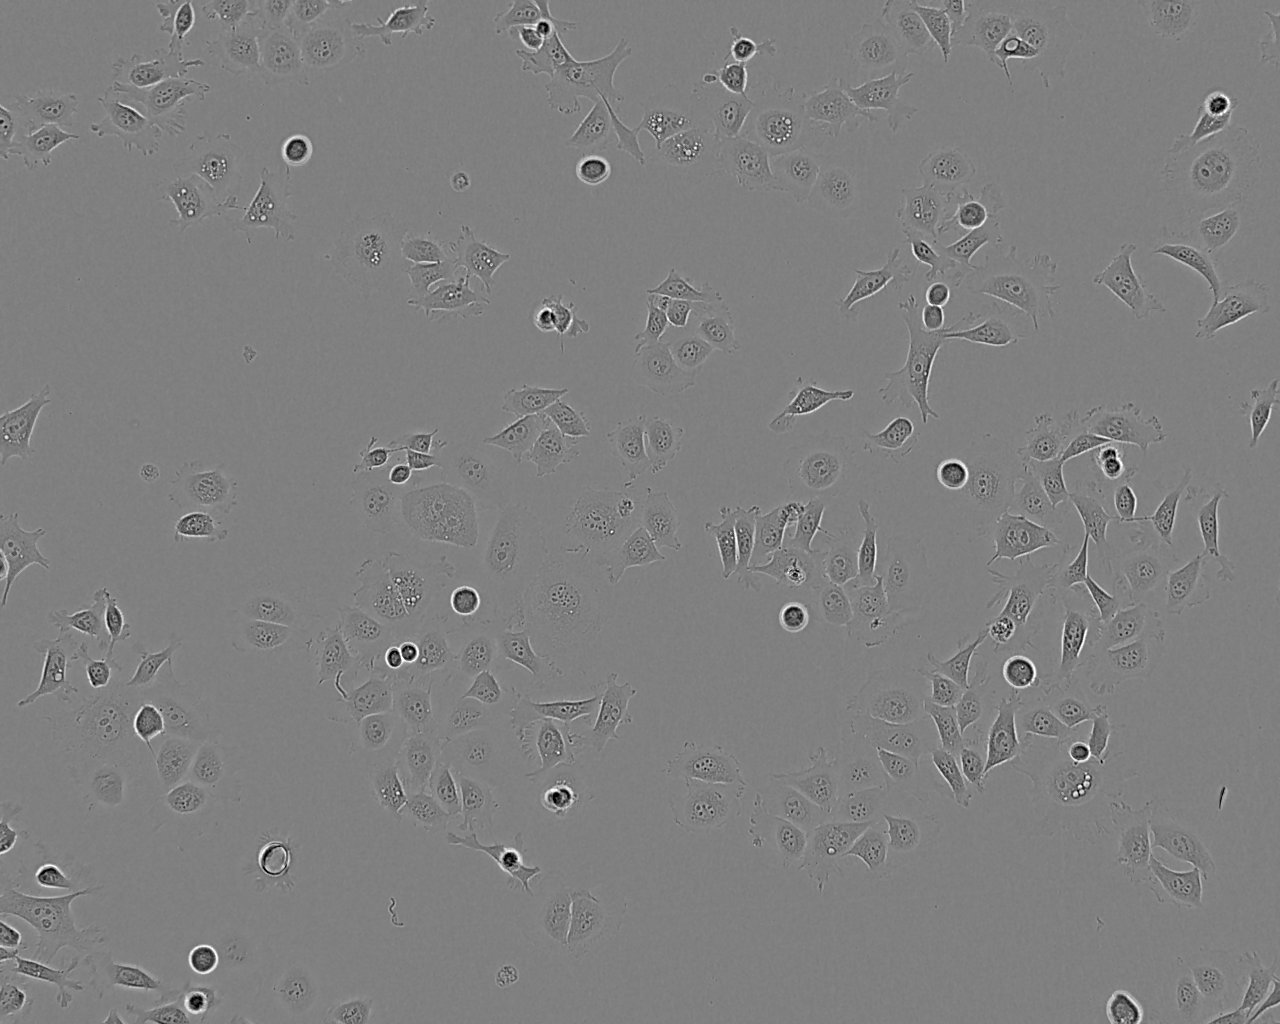 M20 [Human melanoma] cell line人胚胎皮肤细胞系,M20 [Human melanoma] cell line